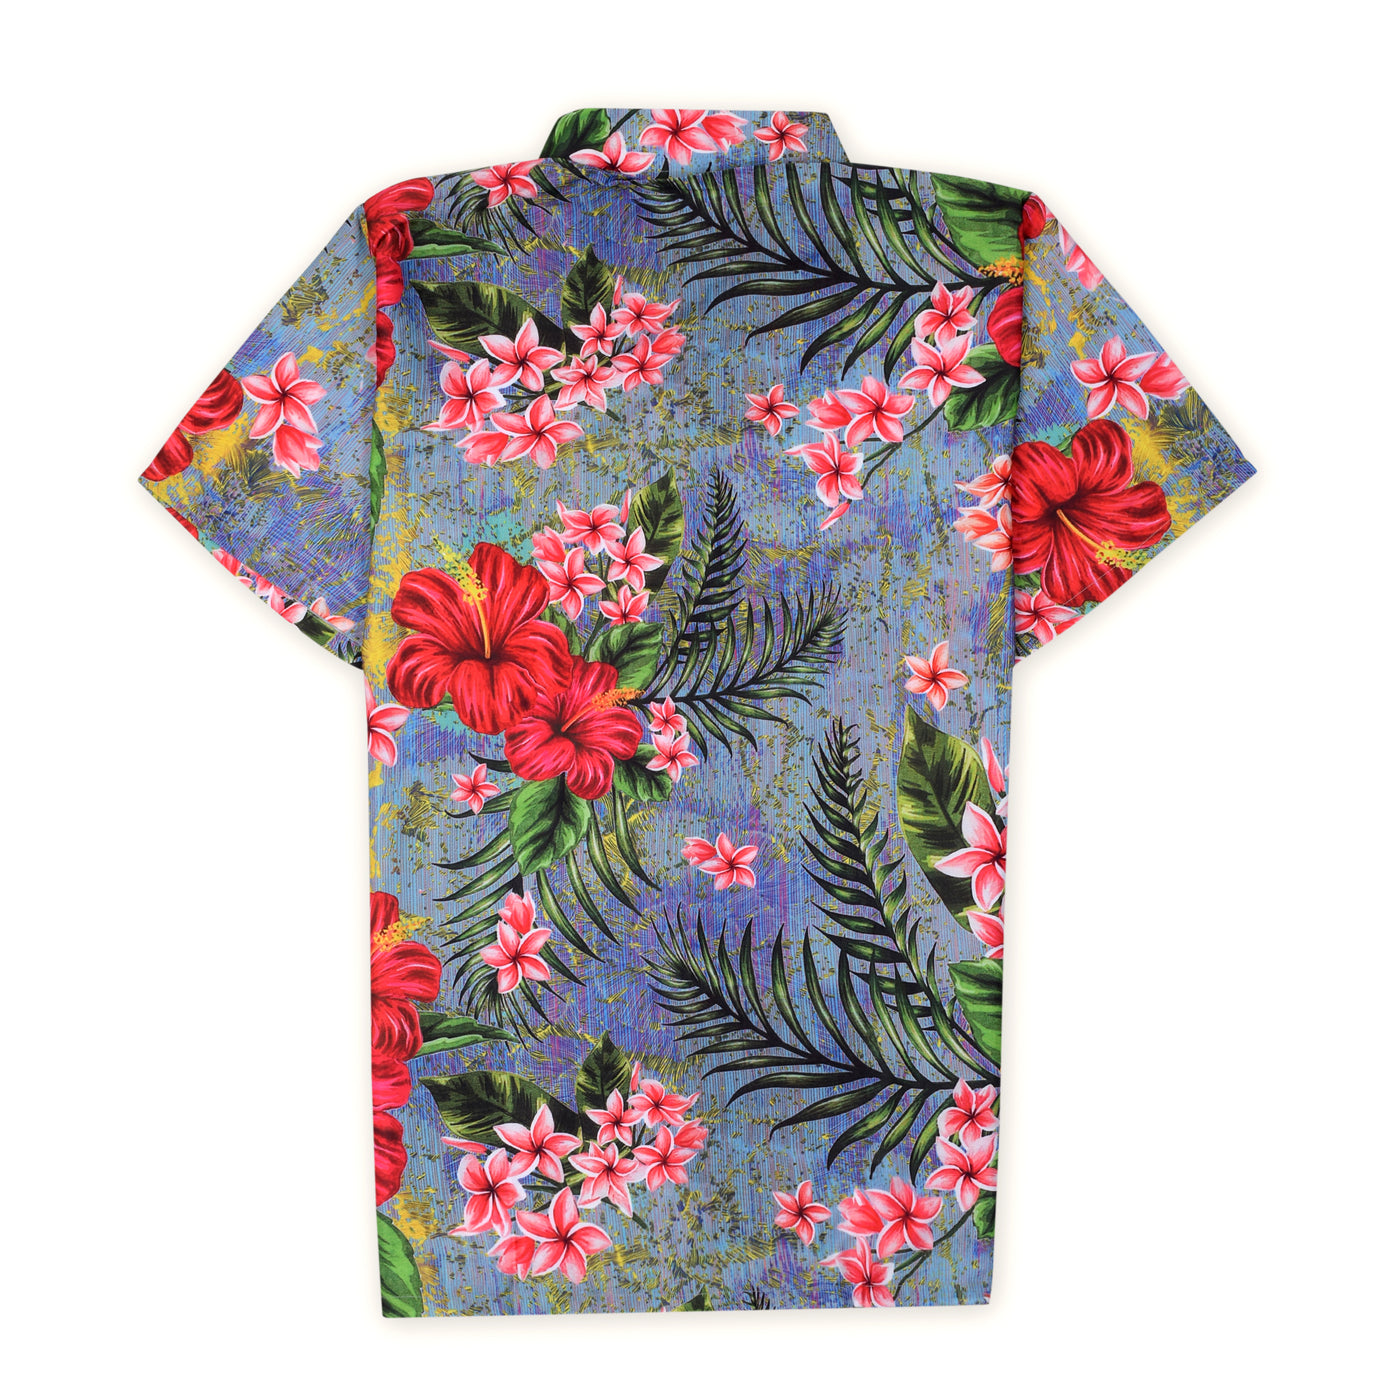 Das Flower Power Hawaiihemd